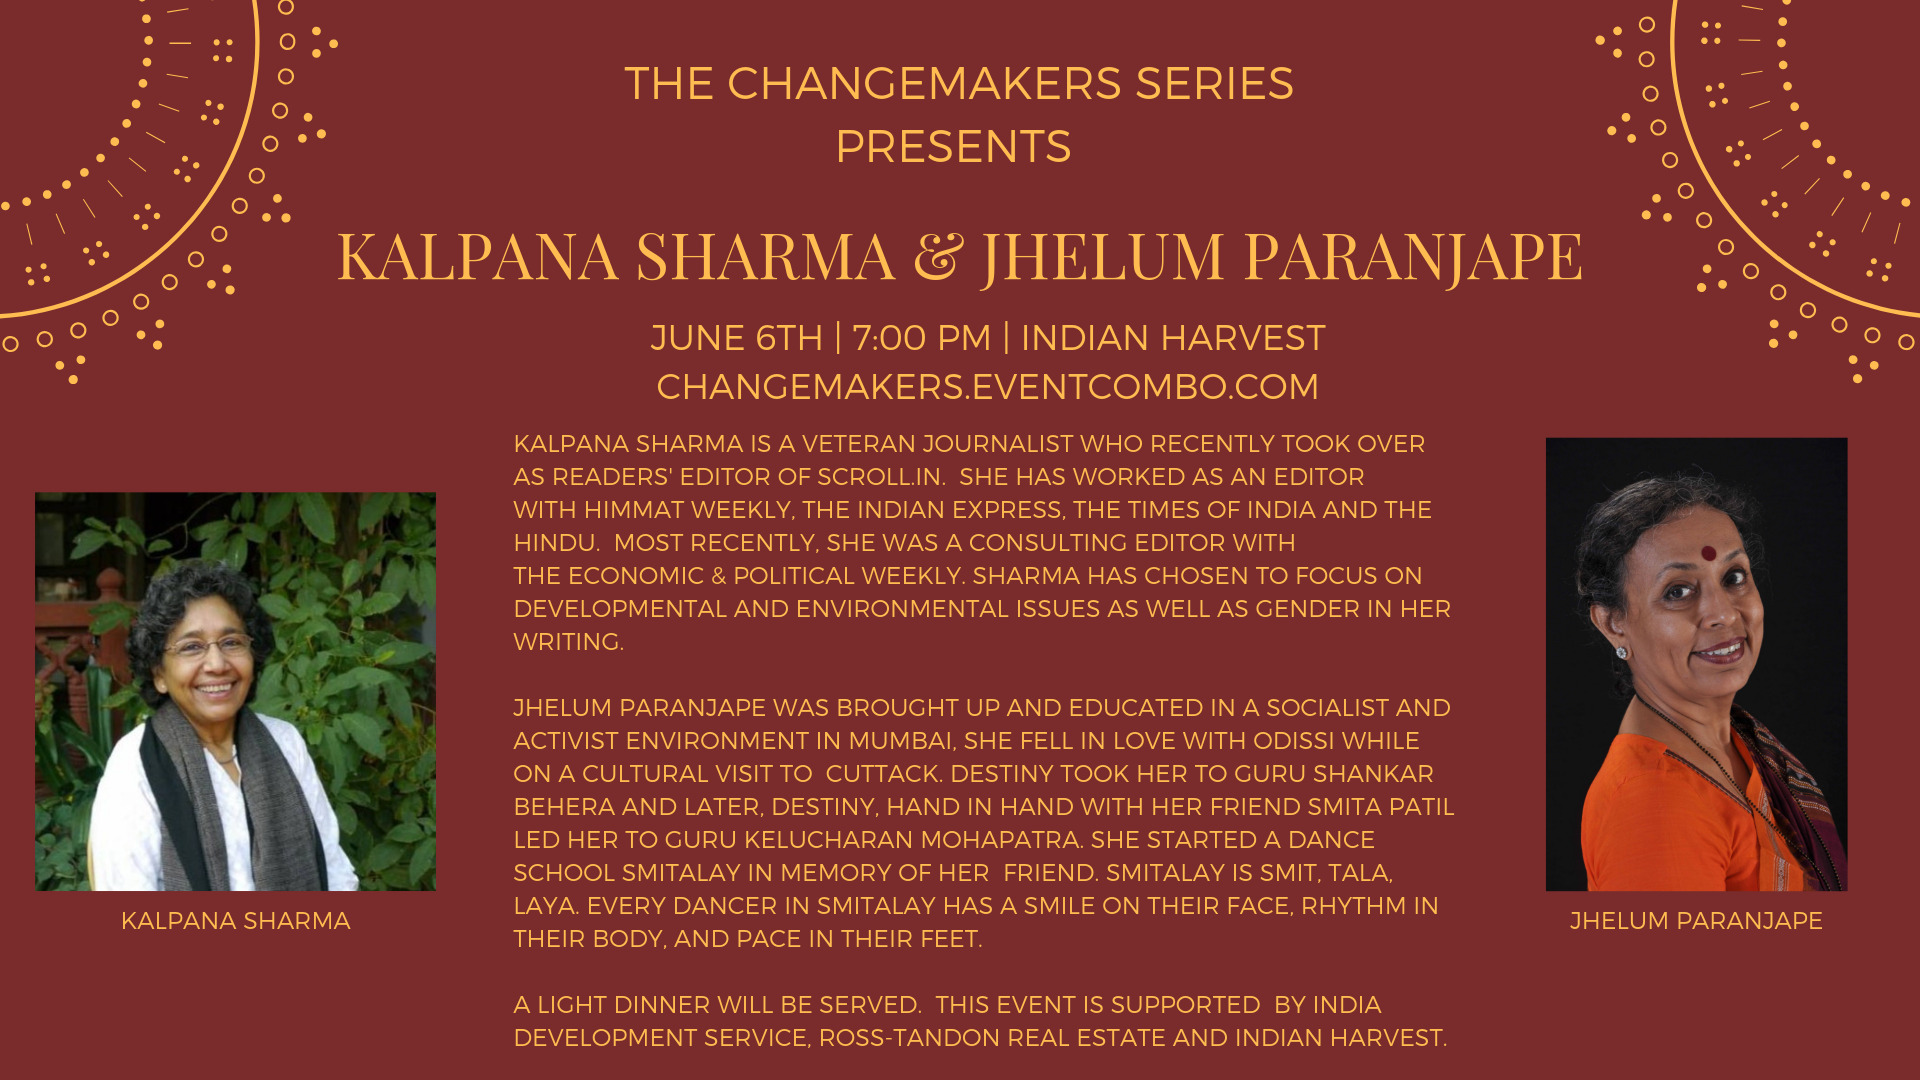 A conversation with Kalpana Sharma and Jhelum Paranjape